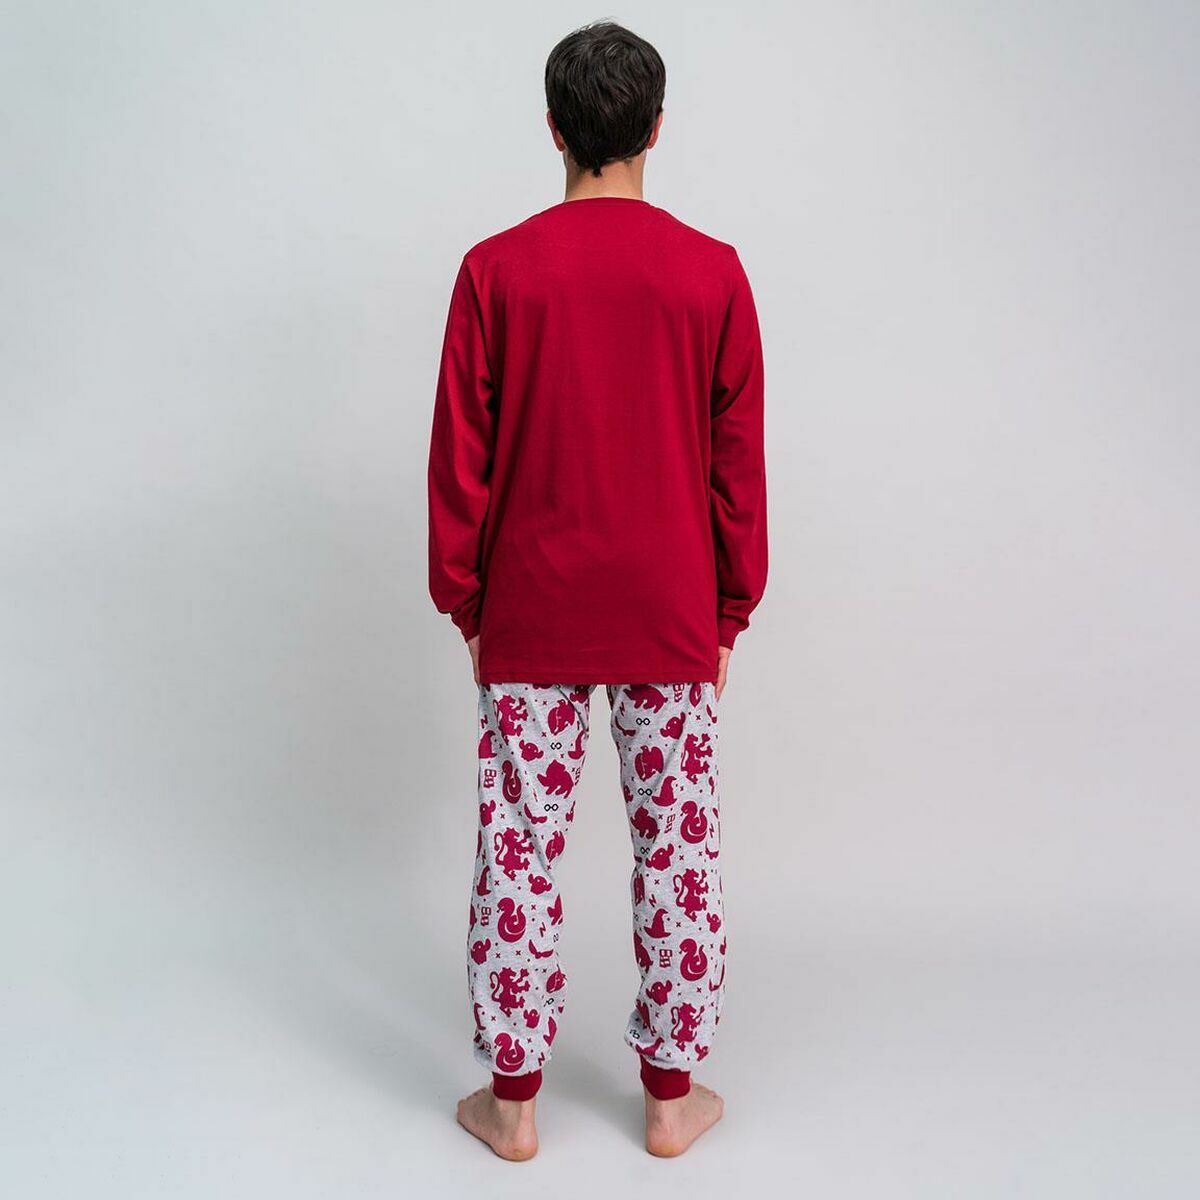 Pyjama Harry Potter Red (Adults) Men